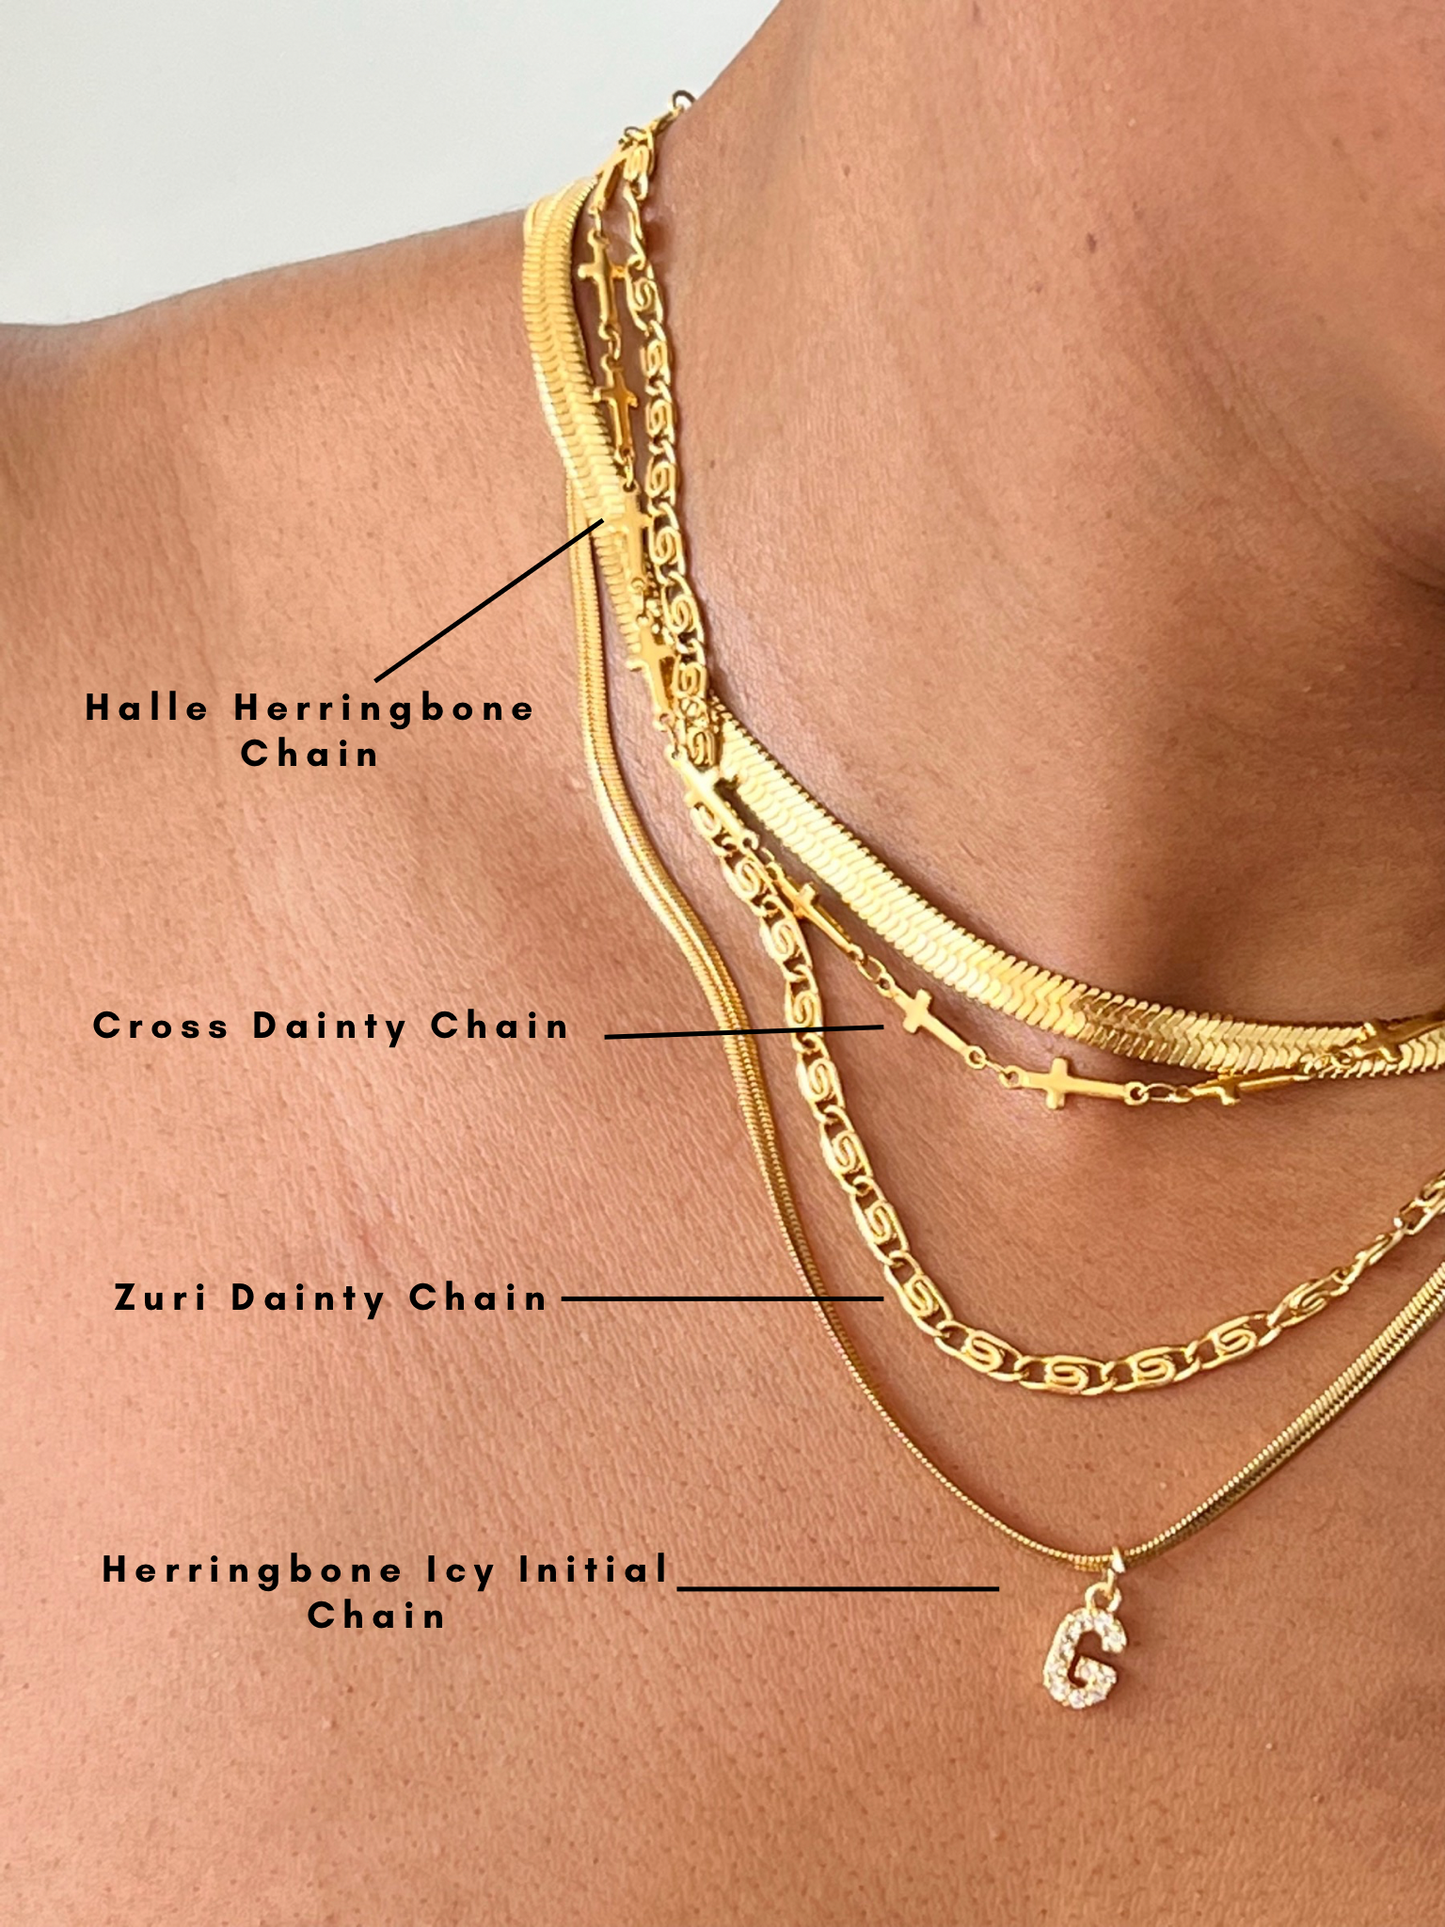 Halle Herringbone Chain